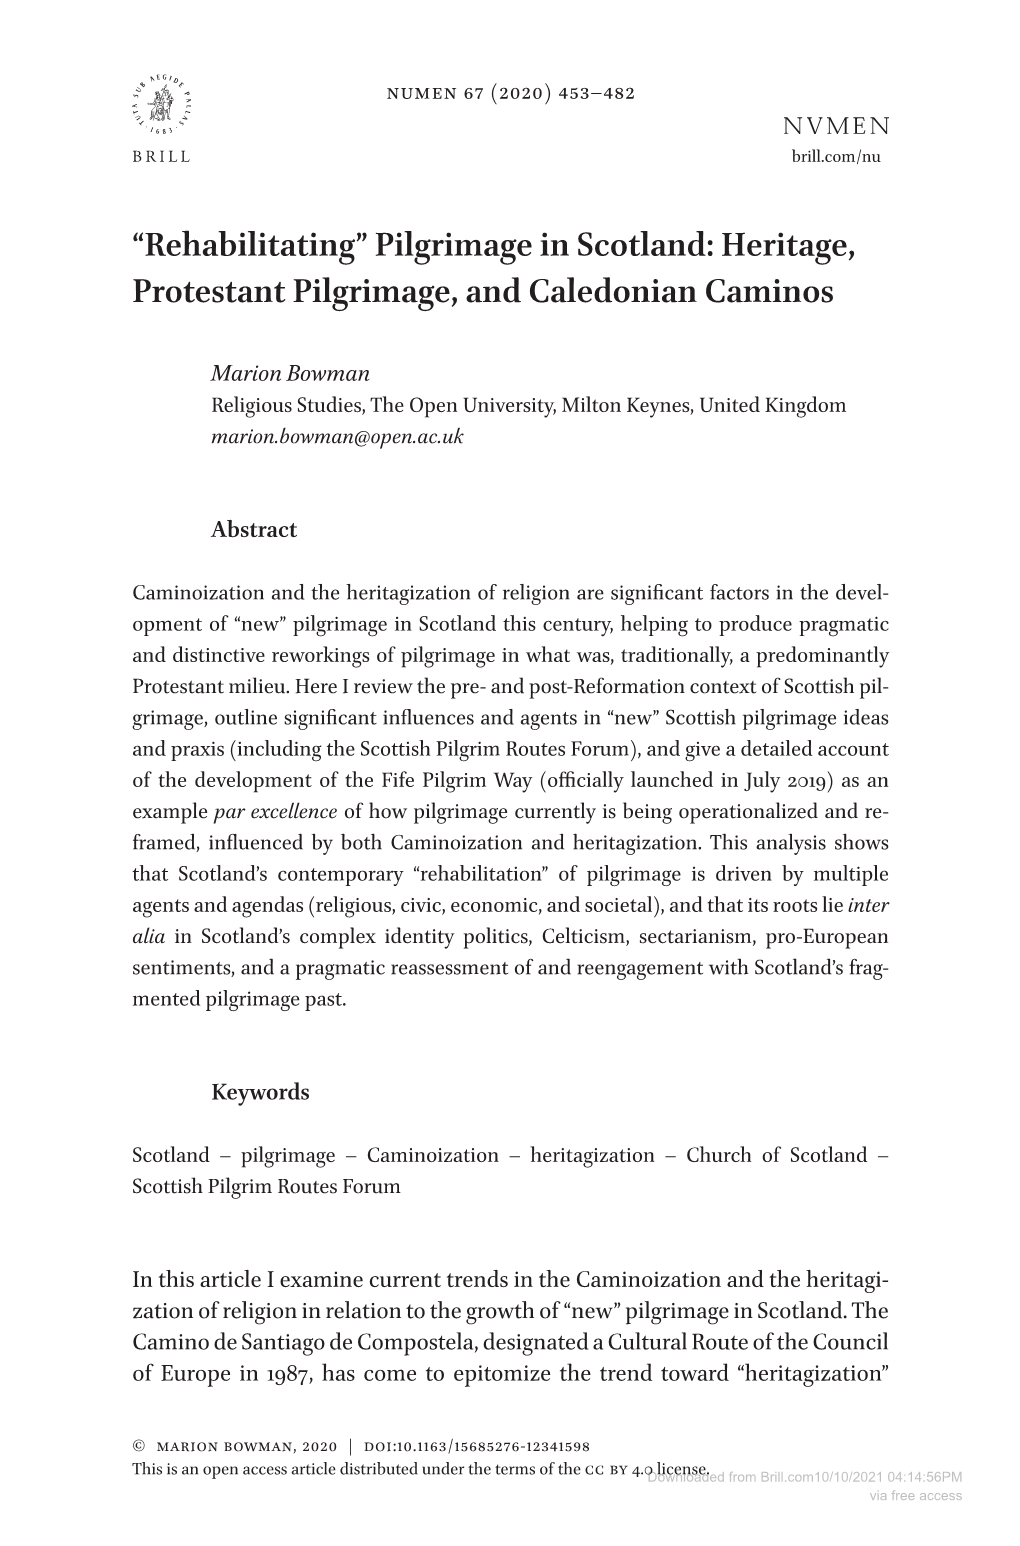 “Rehabilitating” Pilgrimage in Scotland: Heritage, Protestant Pilgrimage, and Caledonian Caminos